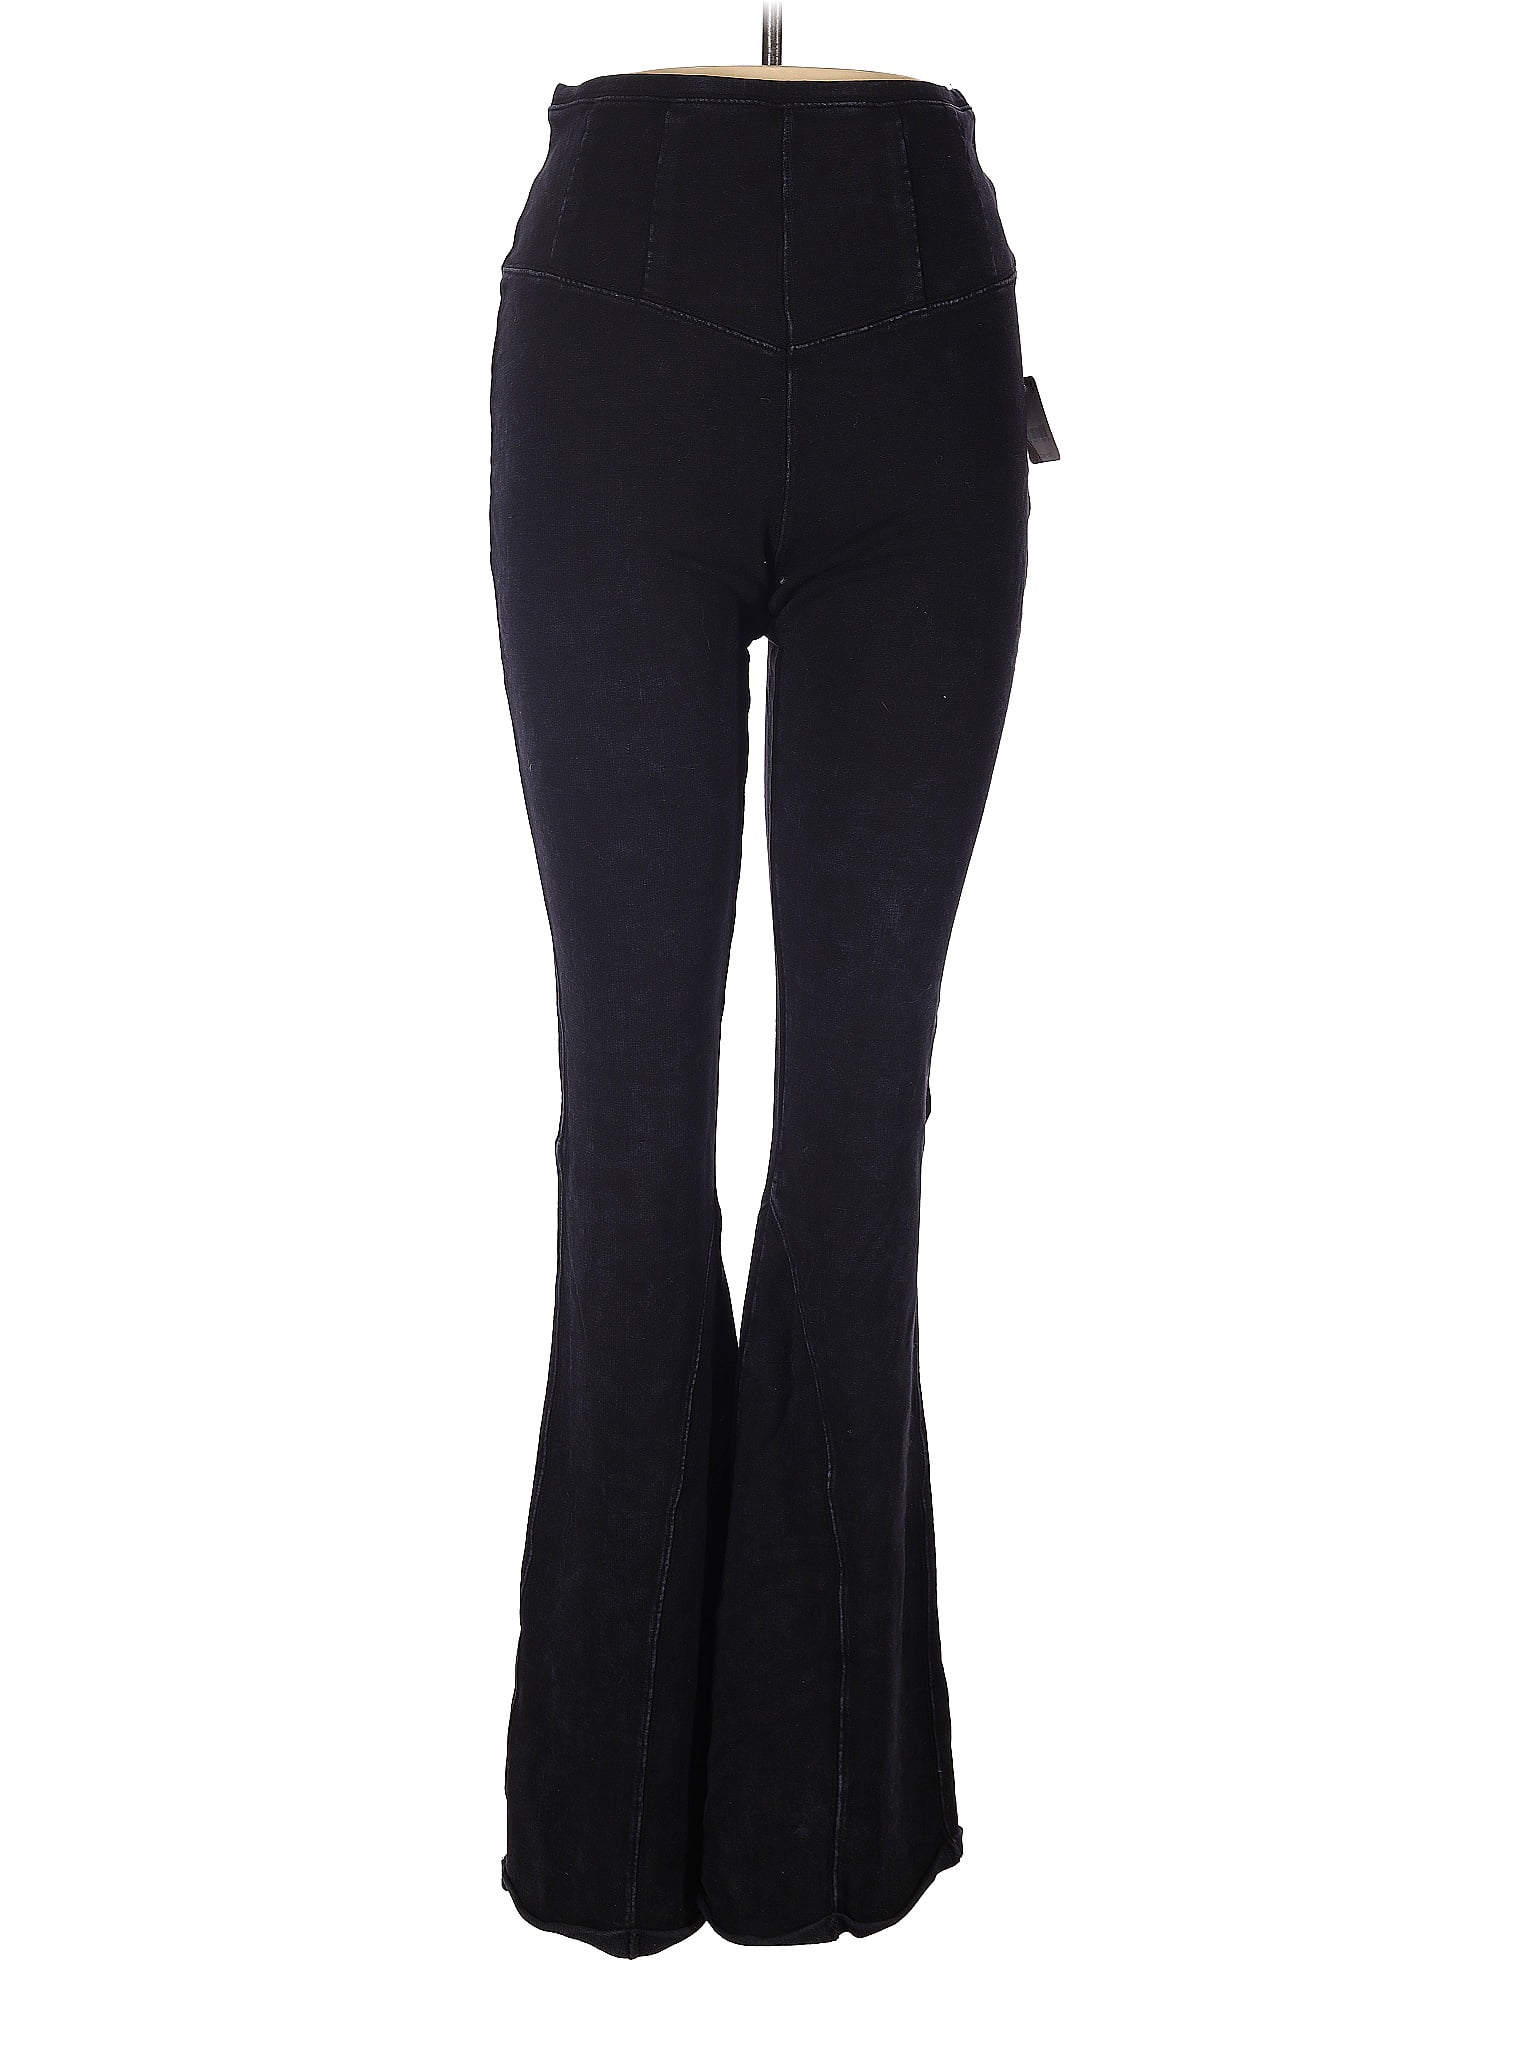 FP Movement Solid Black Active Pants Size M - 58% off | thredUP